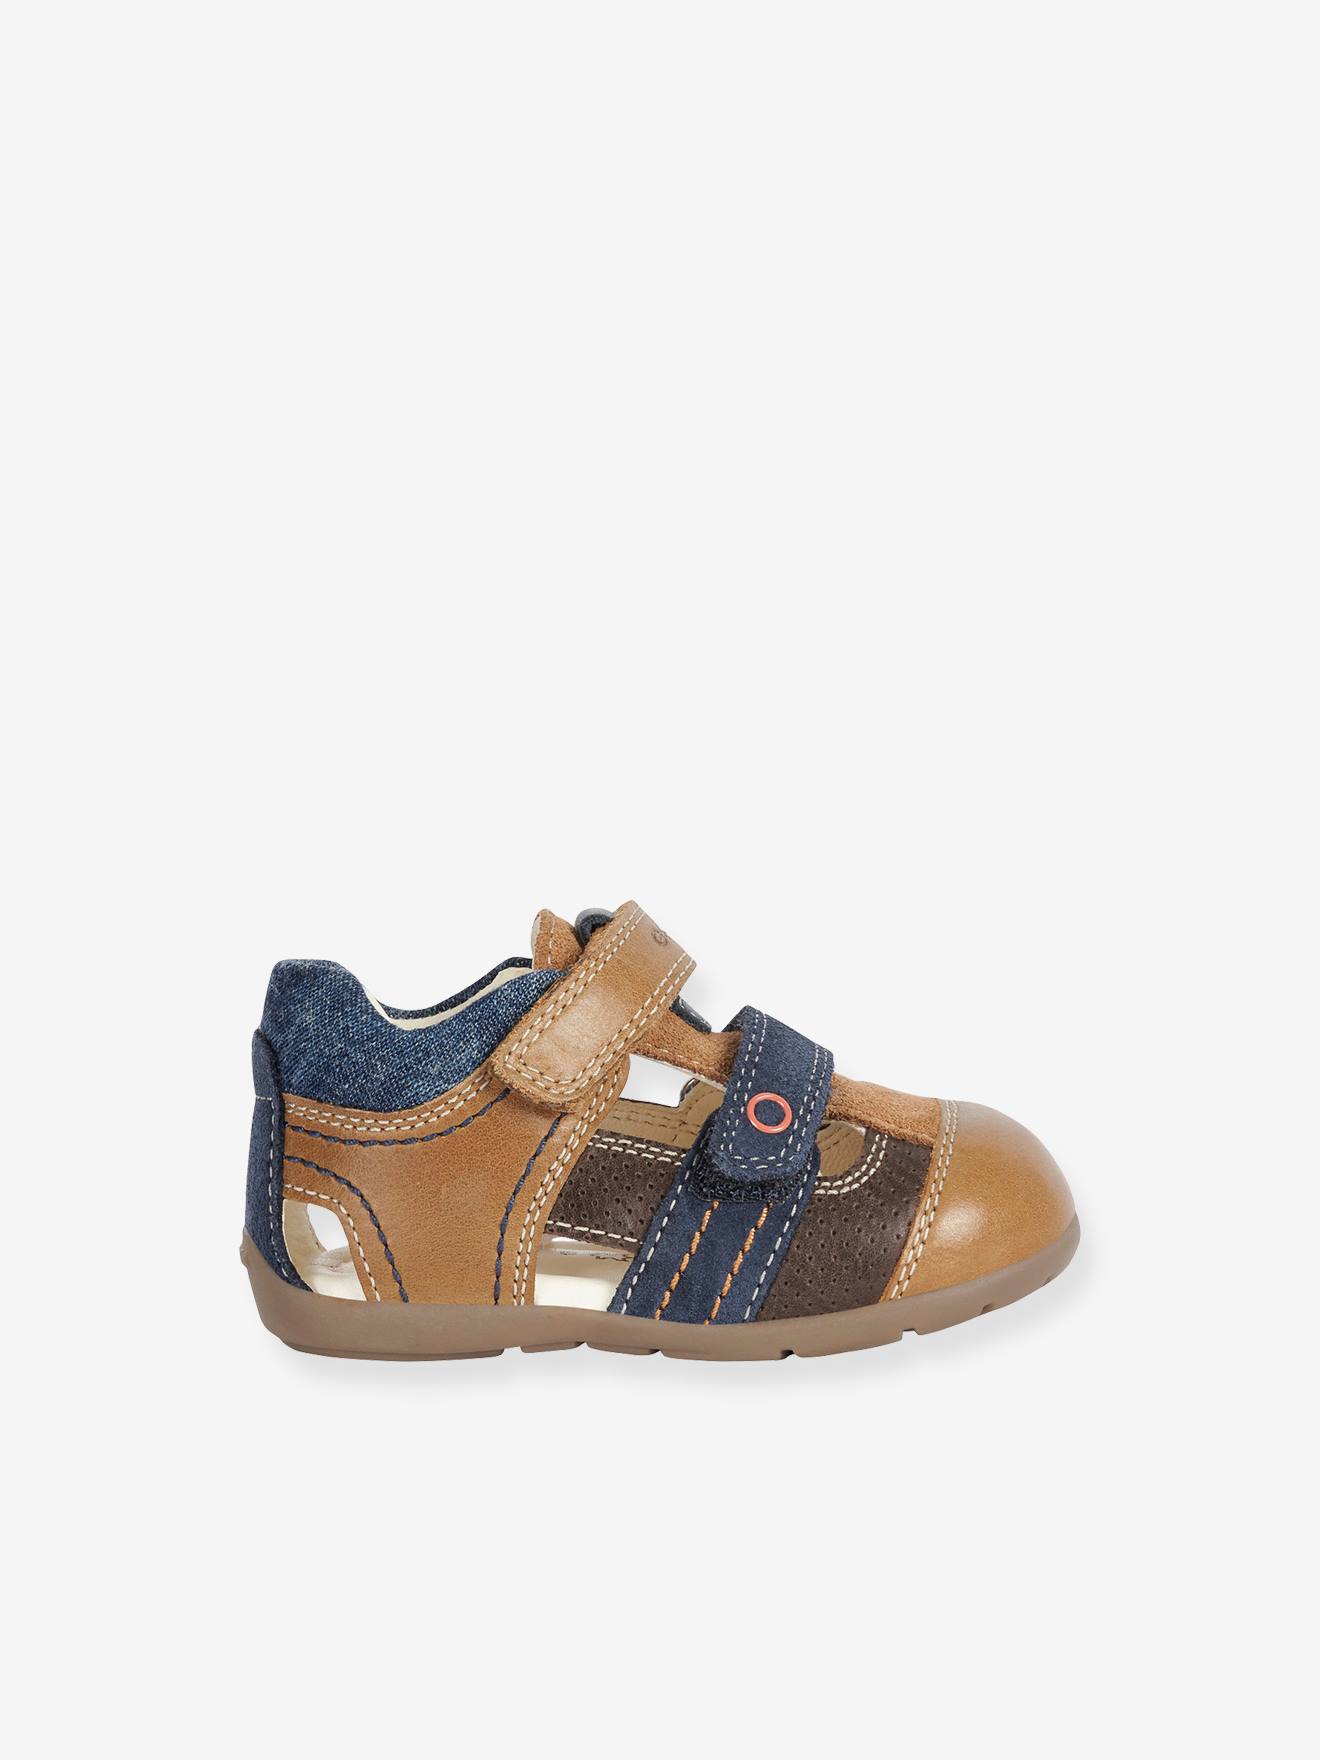 Salida giro Mal Sandals for Babies, Kaytan by GEOX® - beige, Shoes